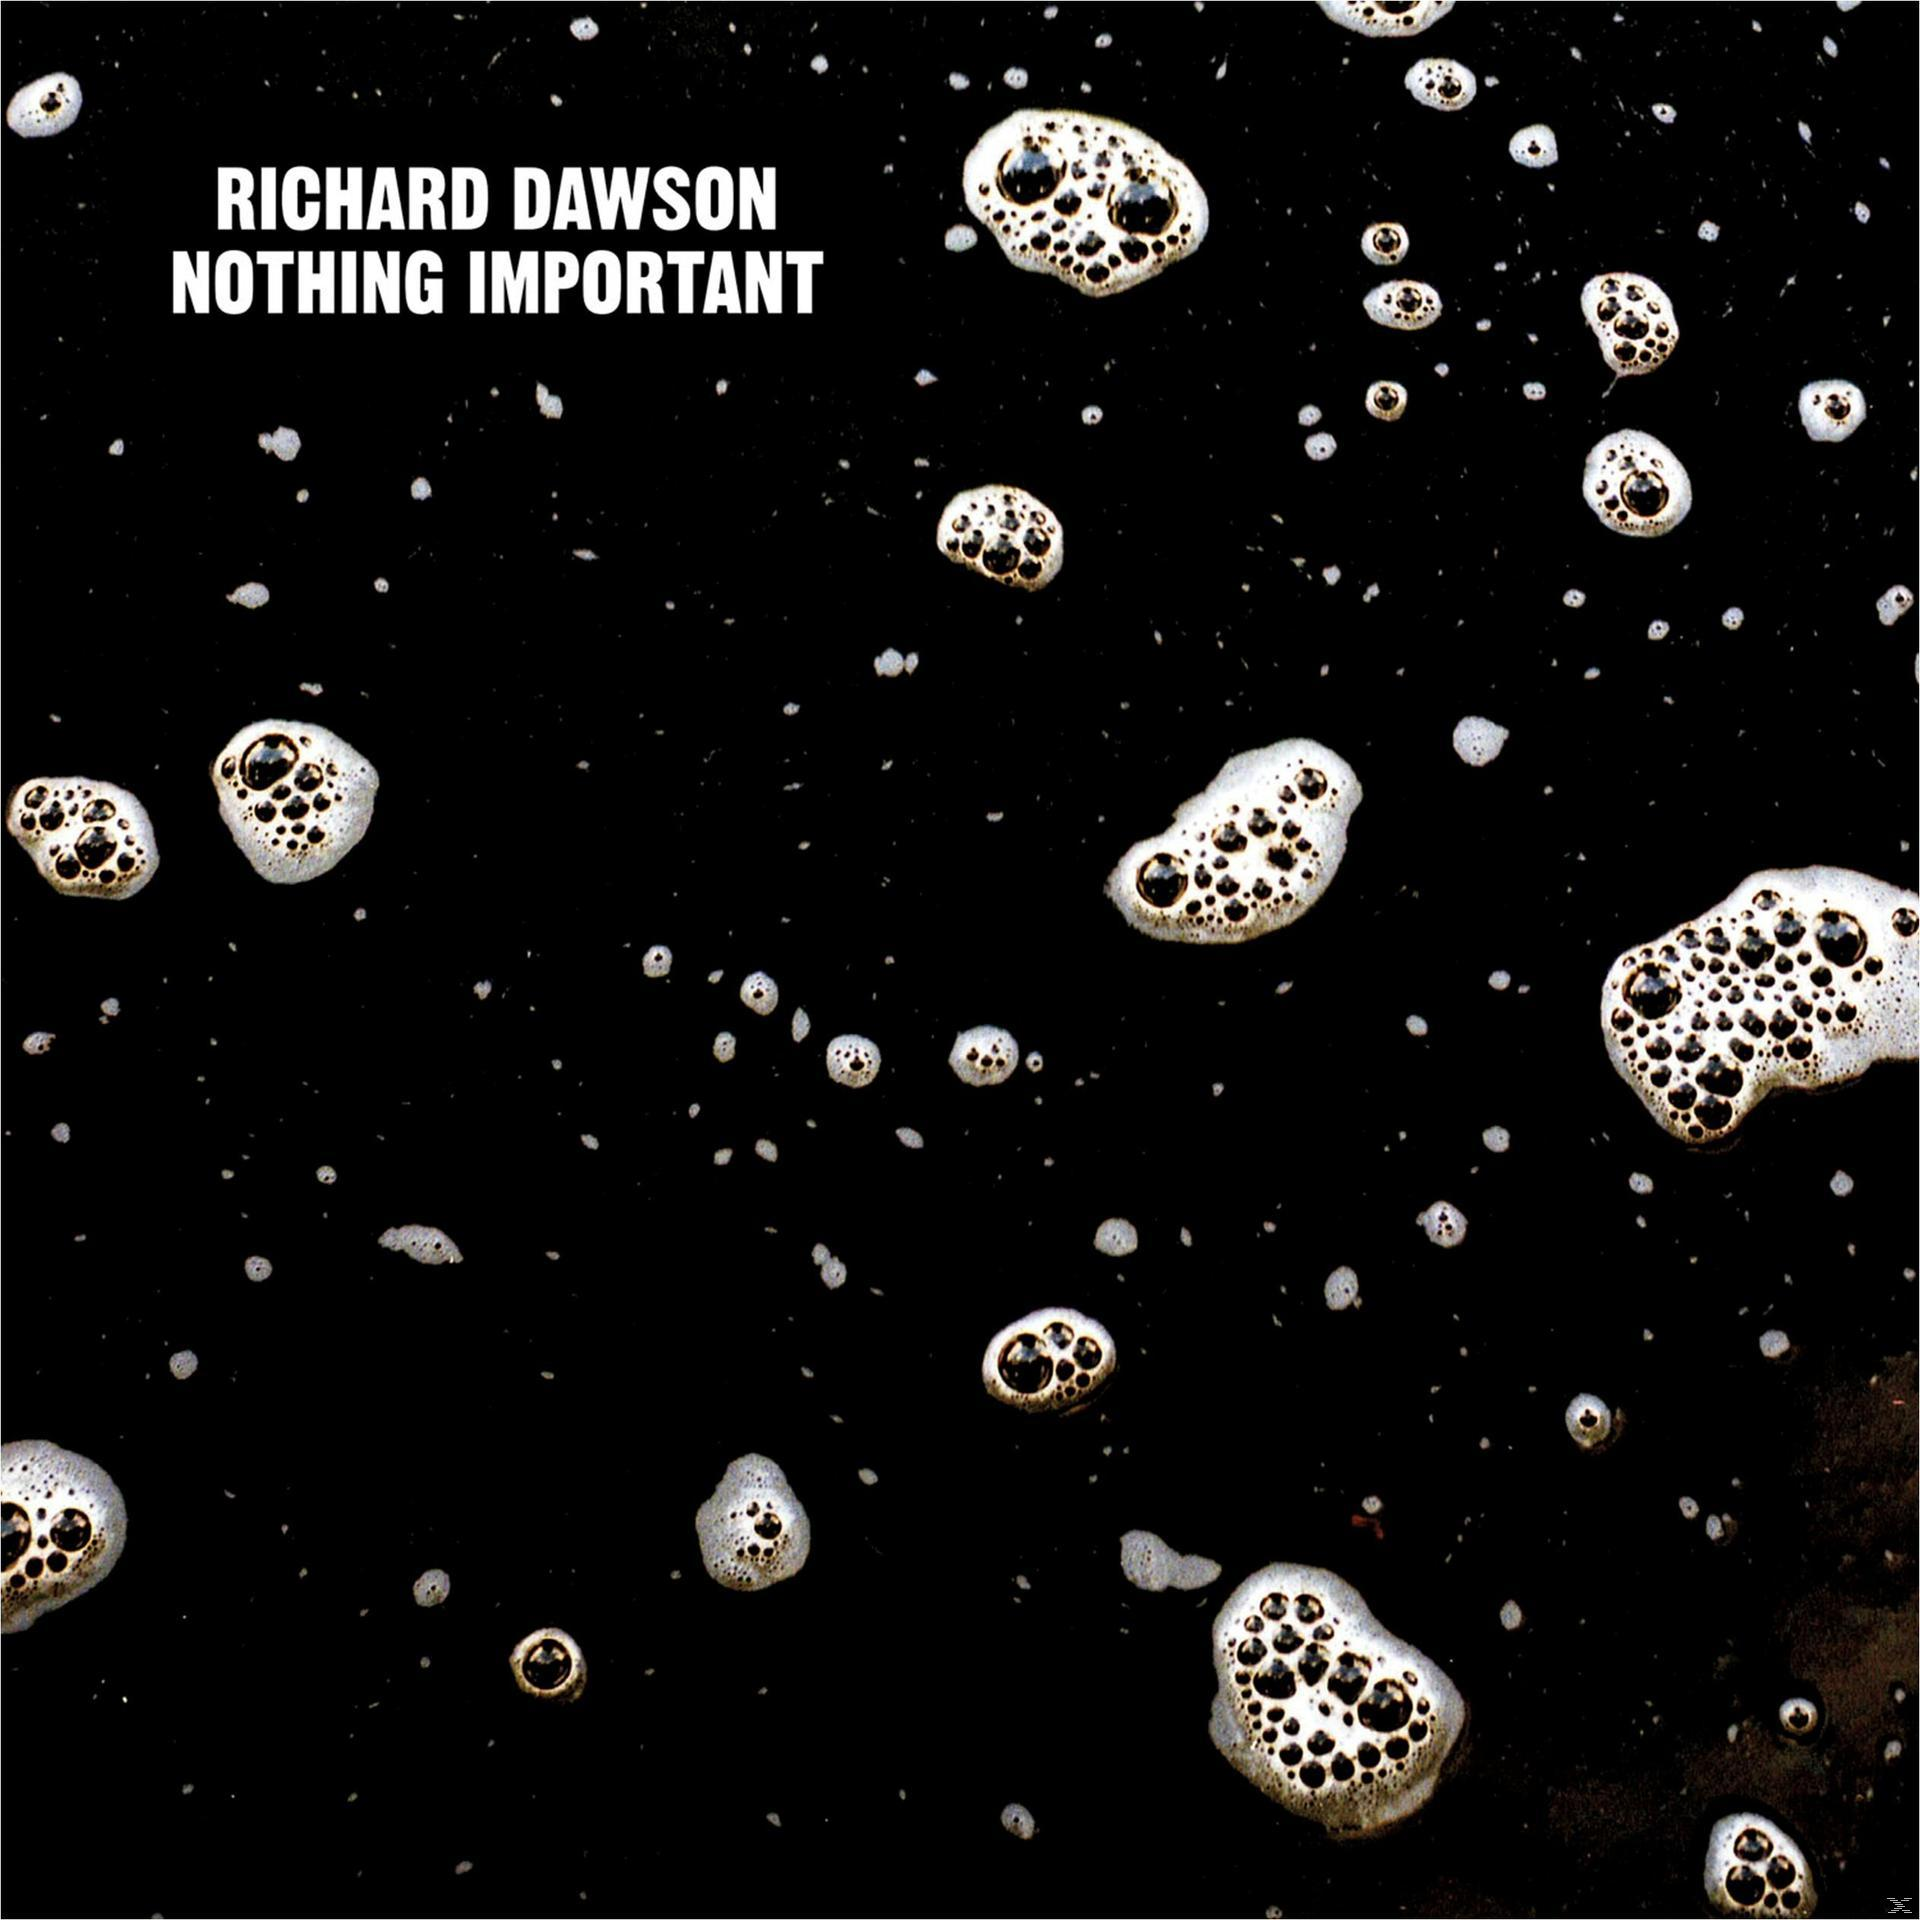 (LP Richard + - Important Nothing Dawson Download) -